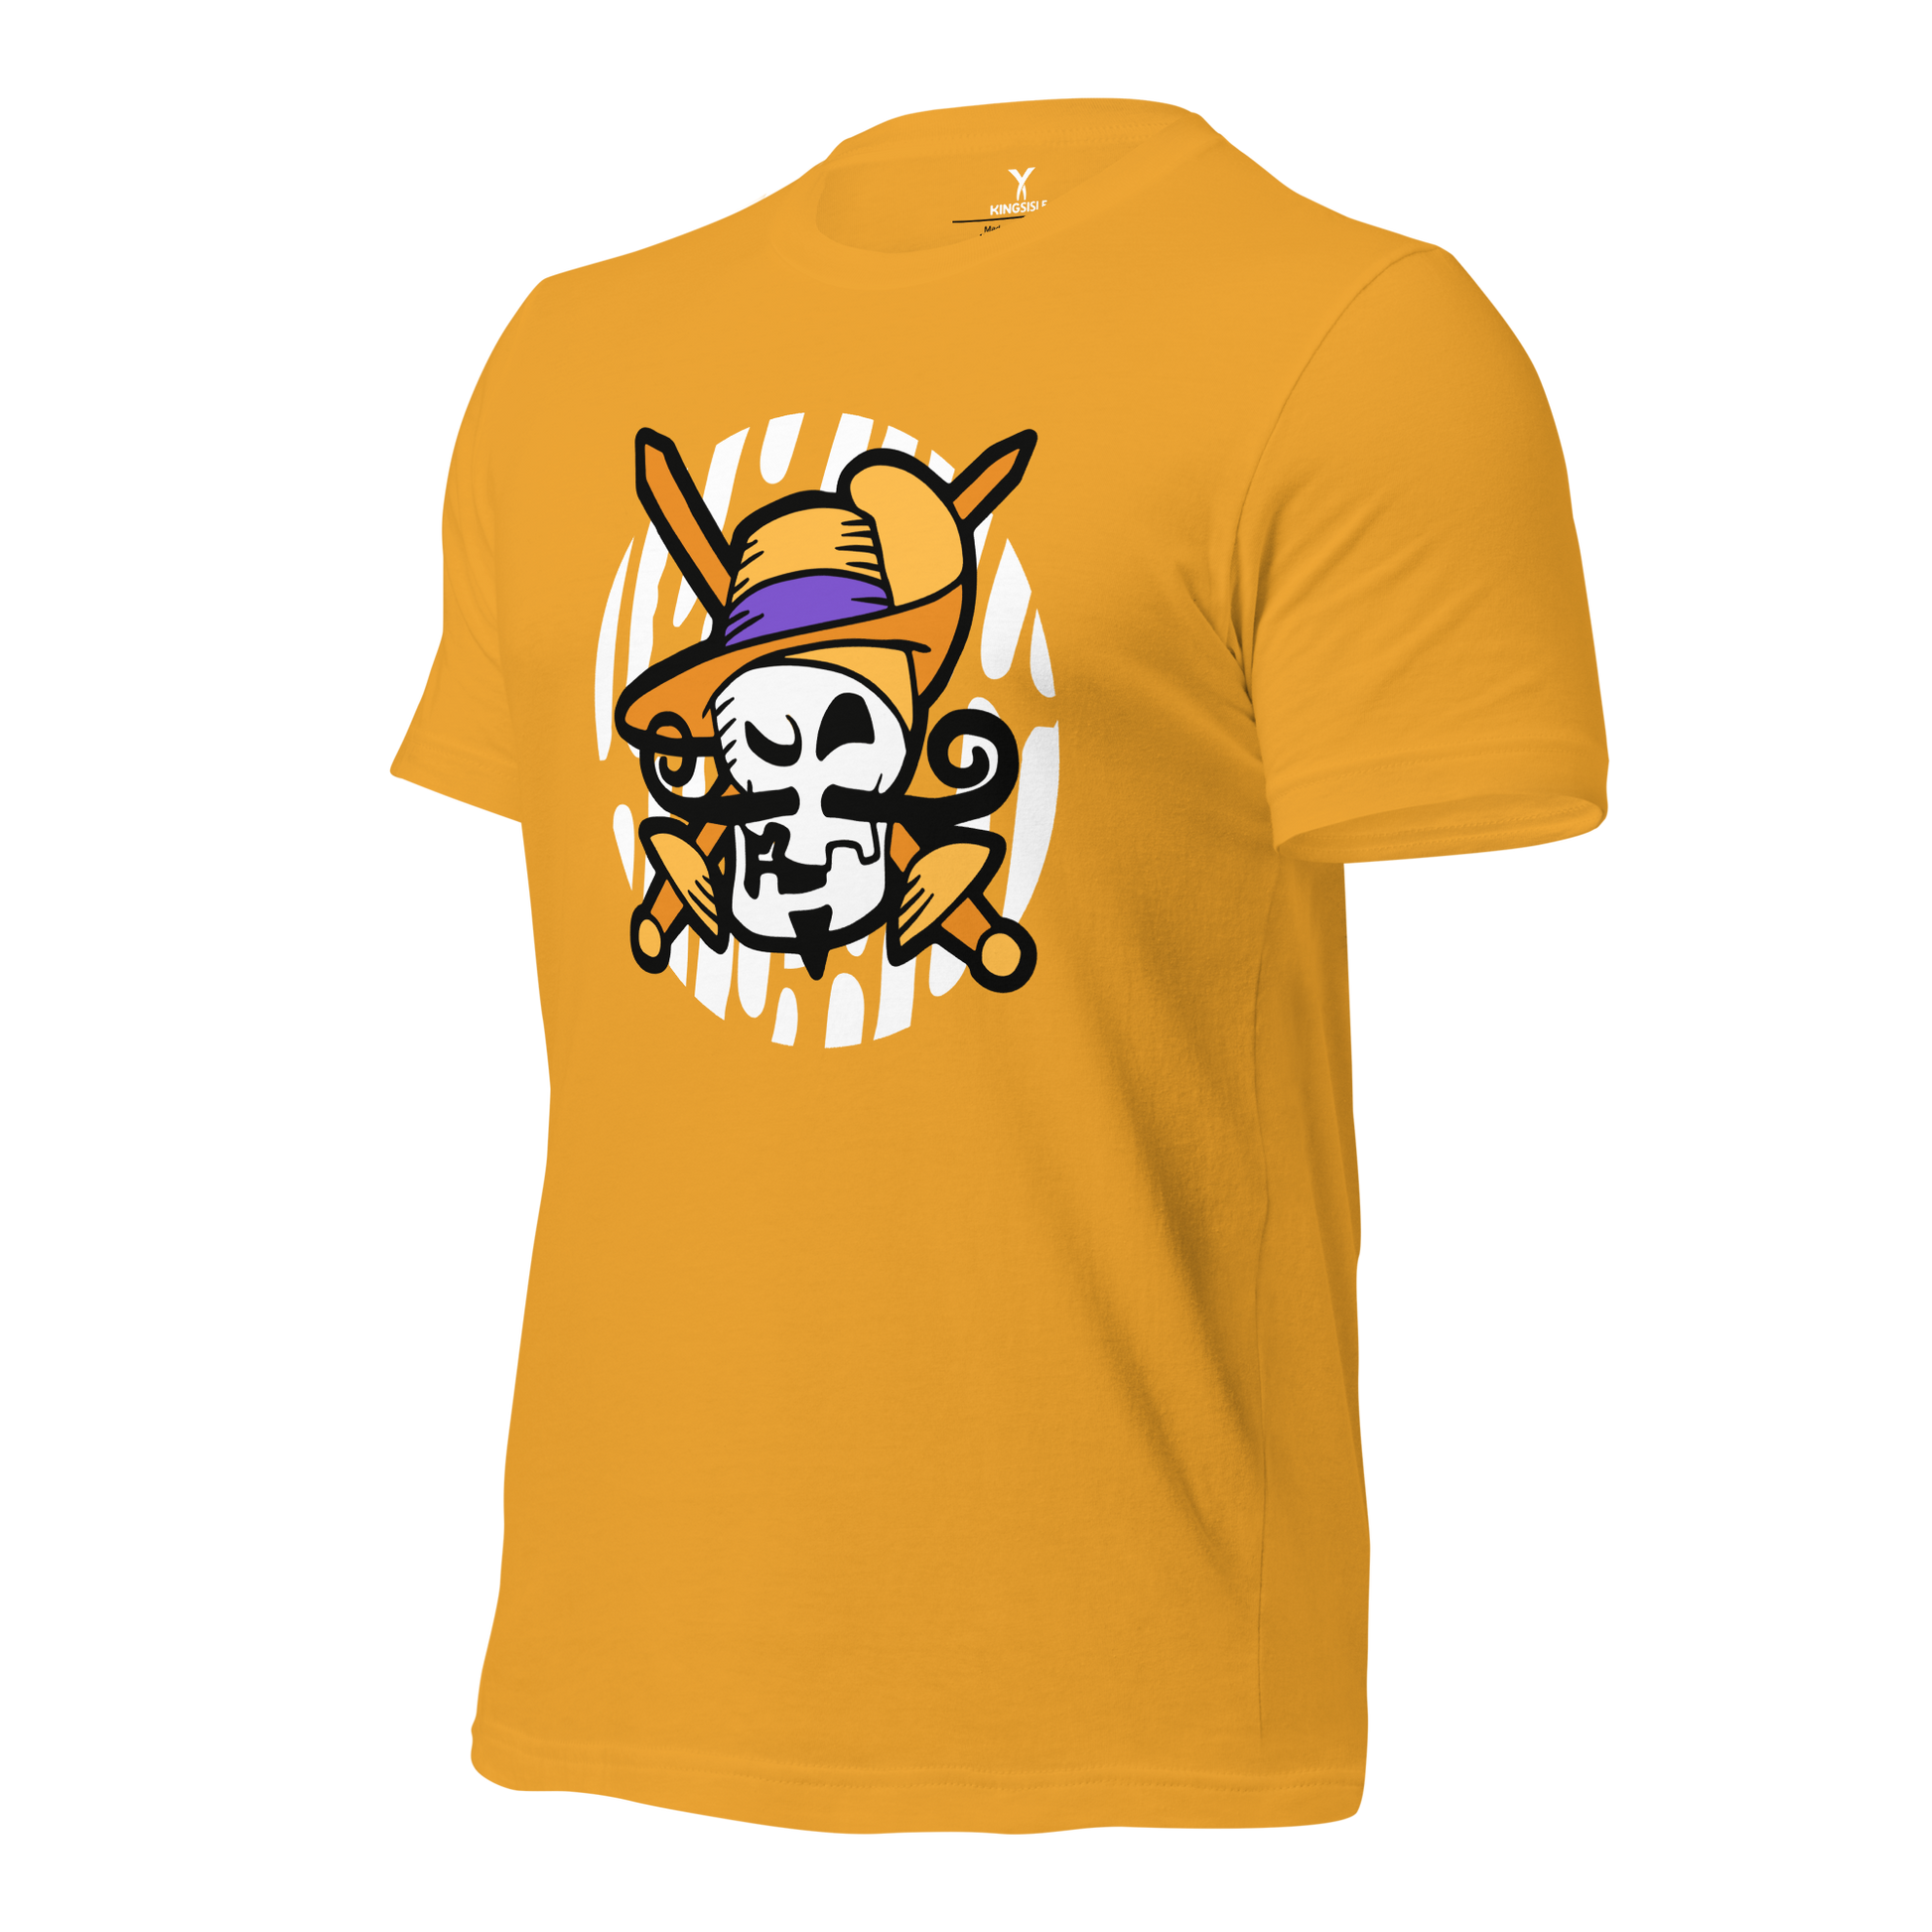 Pirate101-Swashbuckler-Male-Skull-Unisex-Graphic-Shirt2-short-sleeve